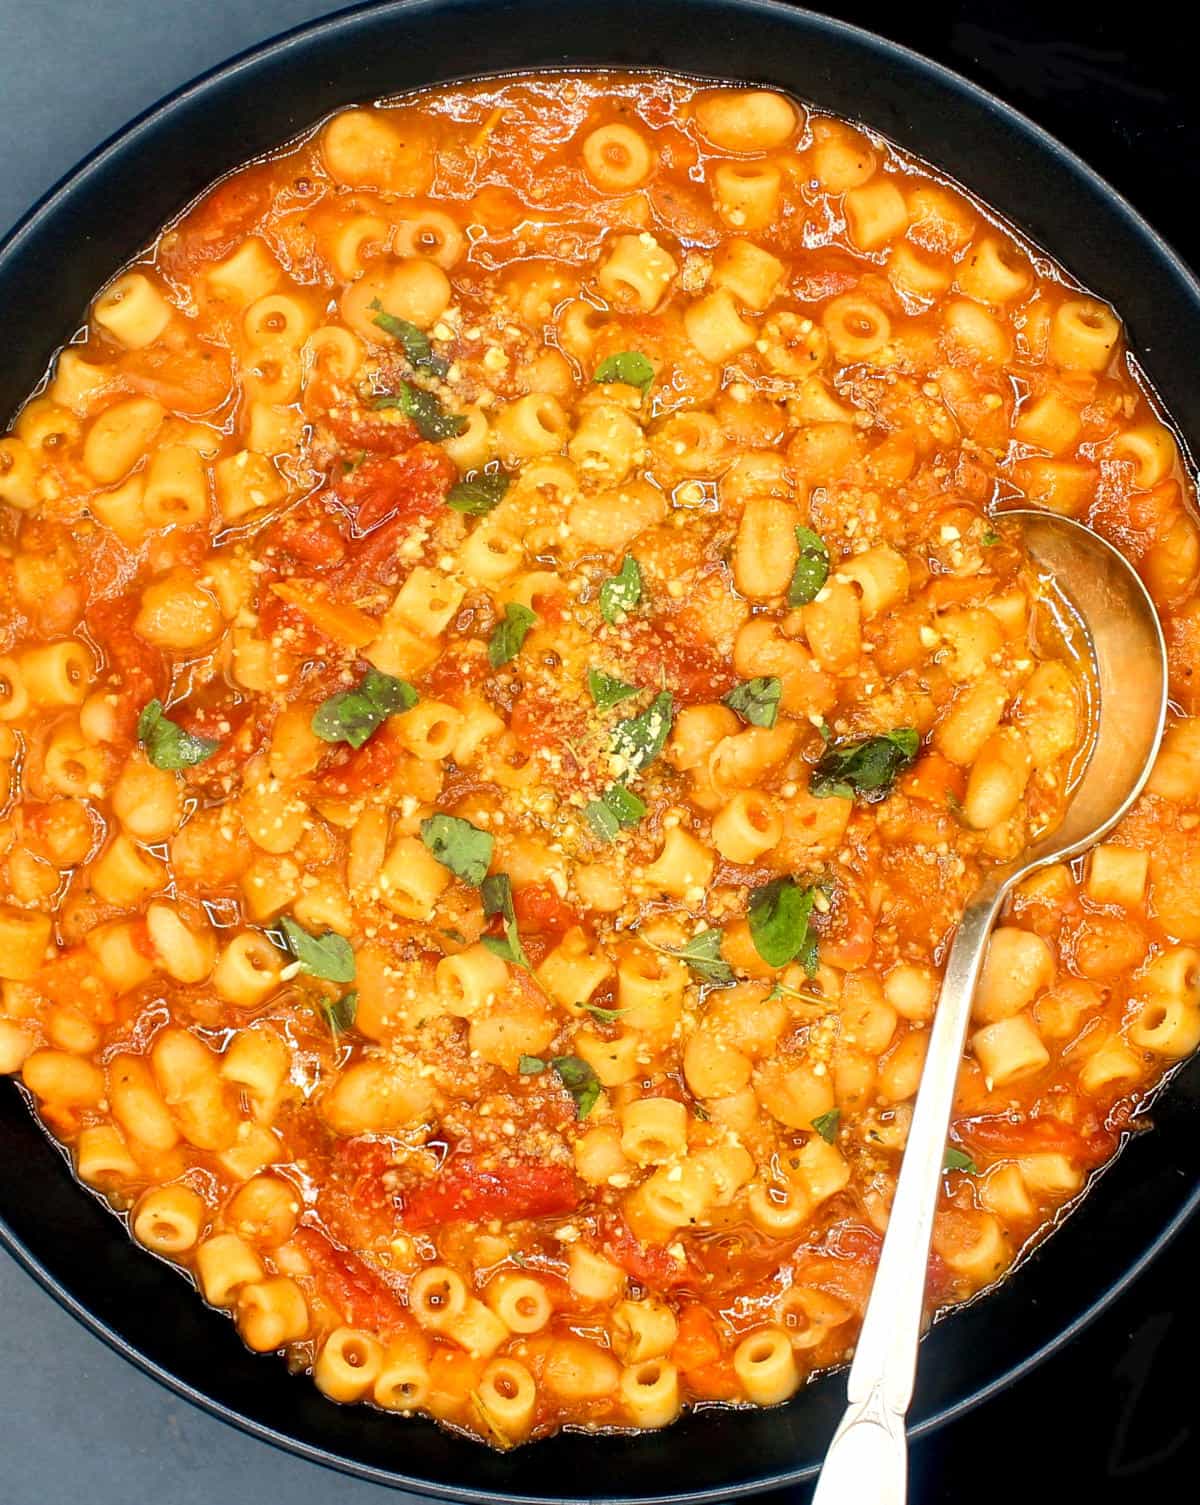 A bowl of vegan pasta fagioli or pasta fazool soup.